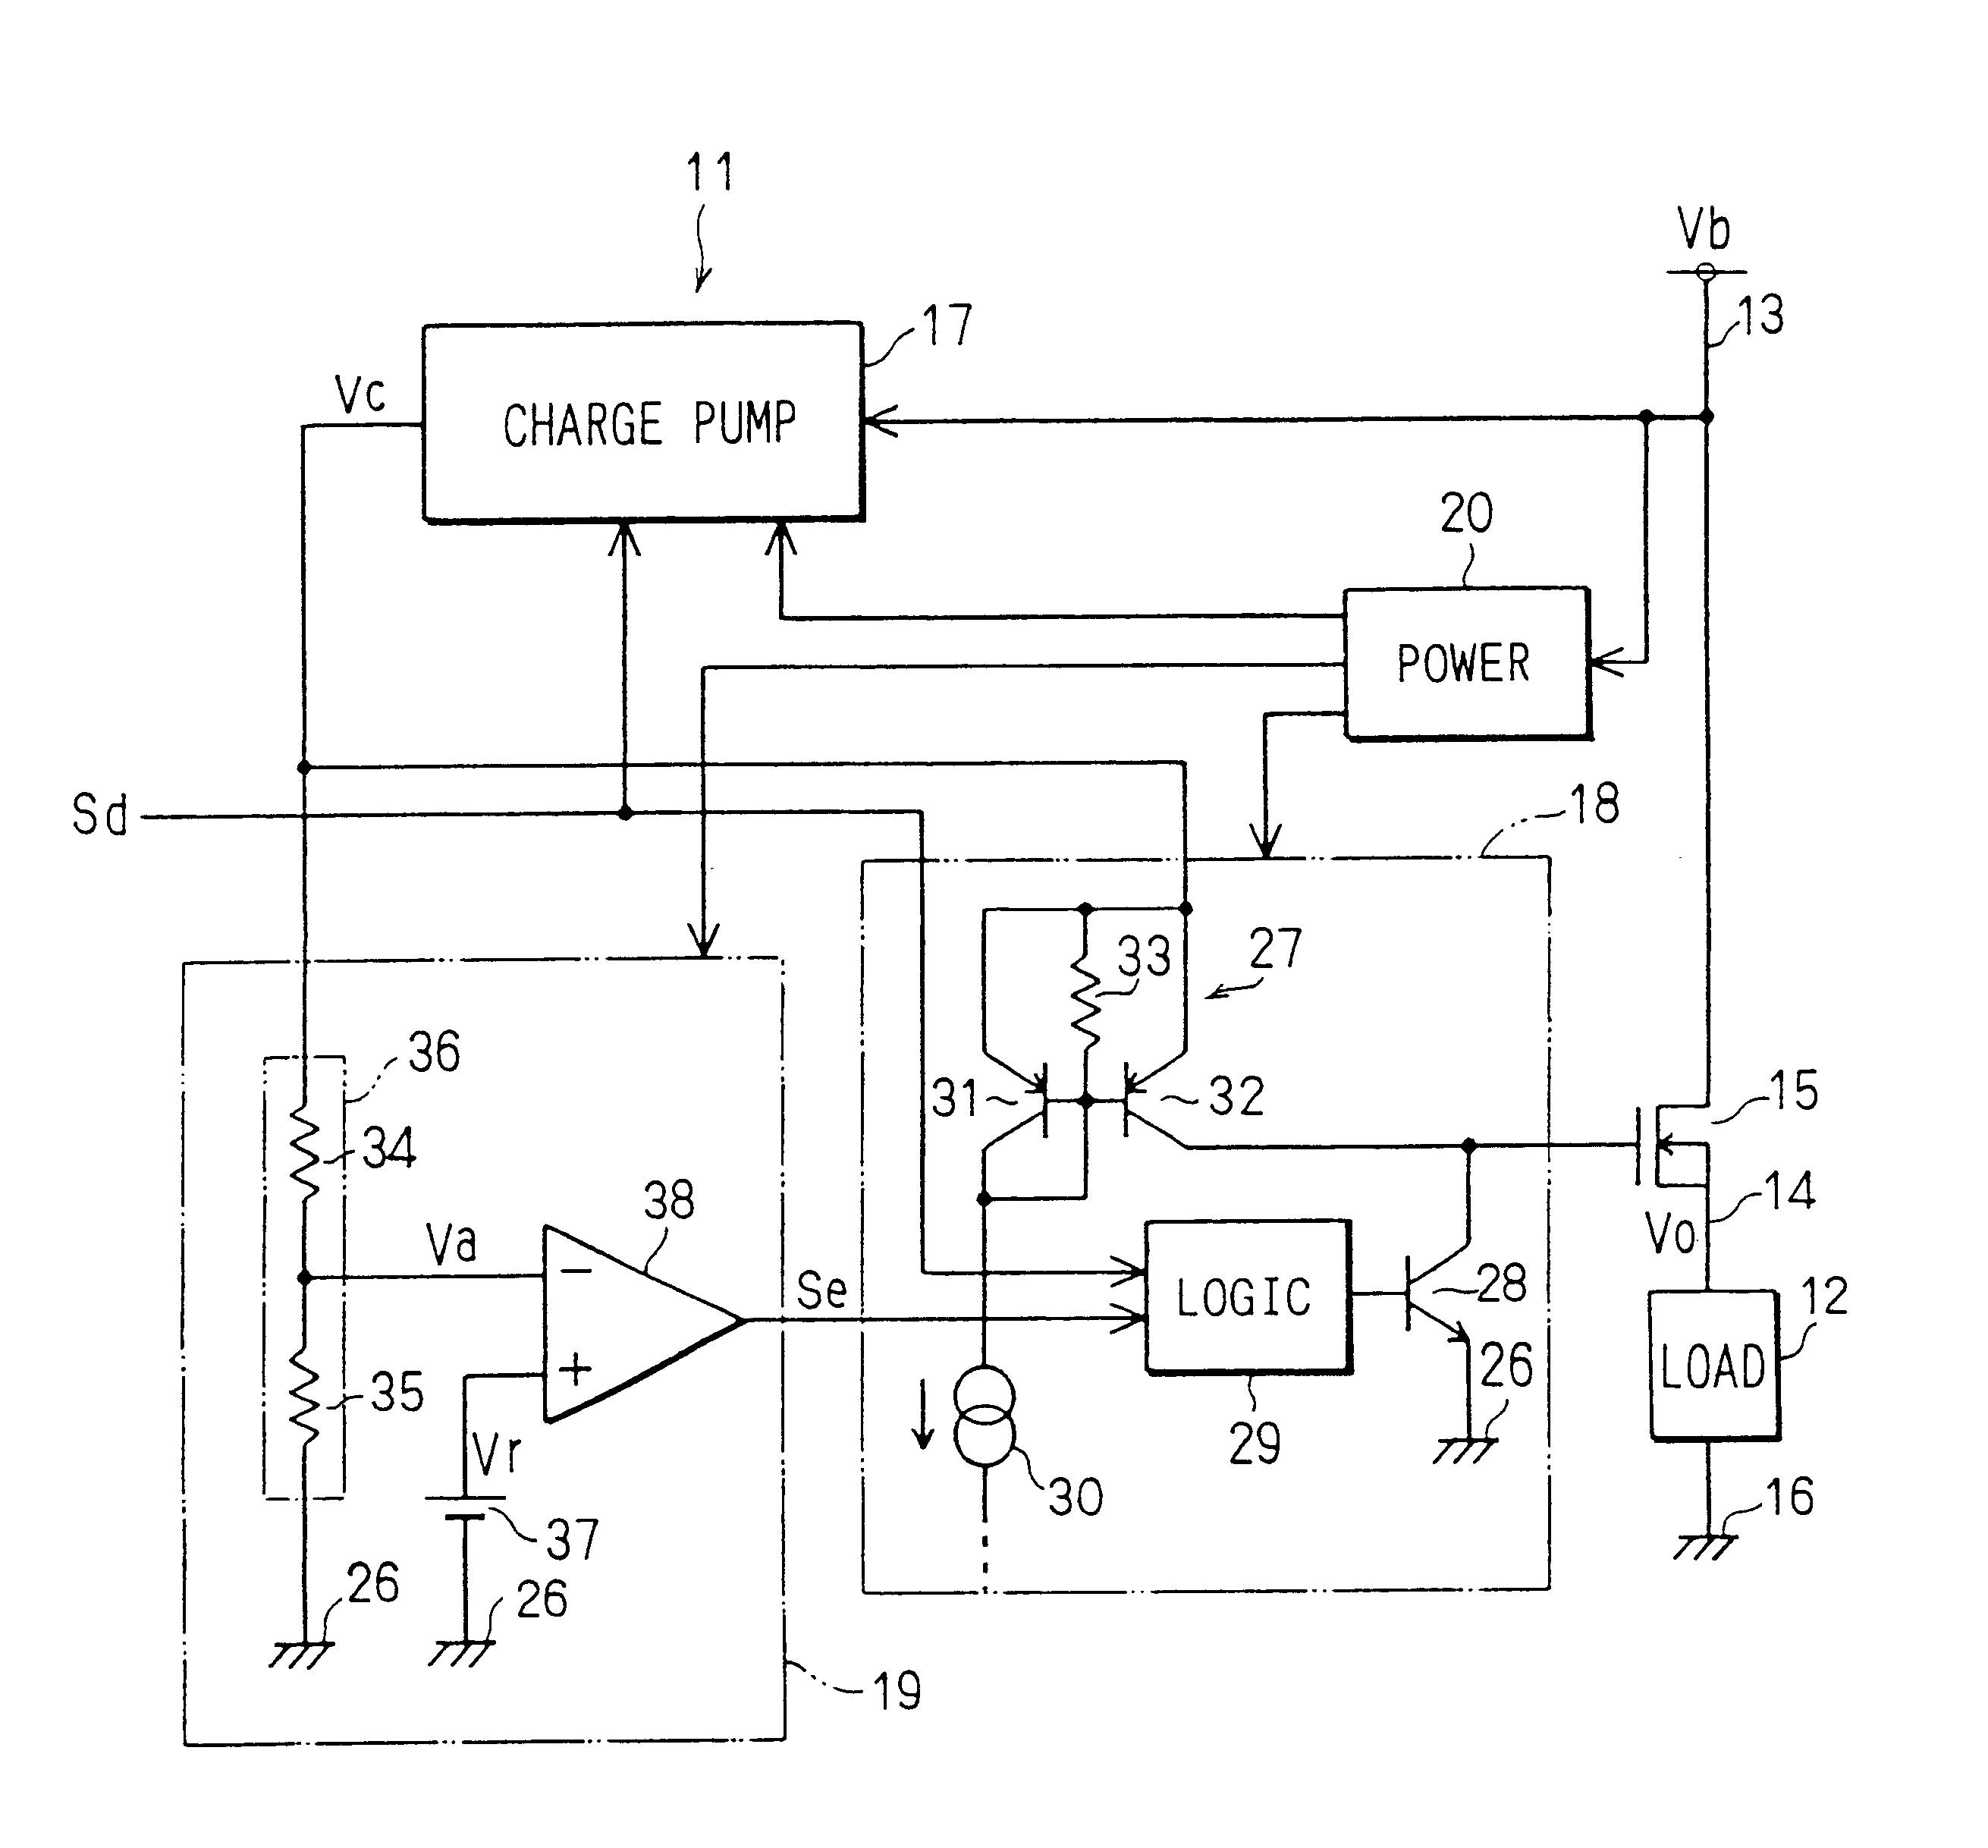 Load drive circuit having low voltage detector